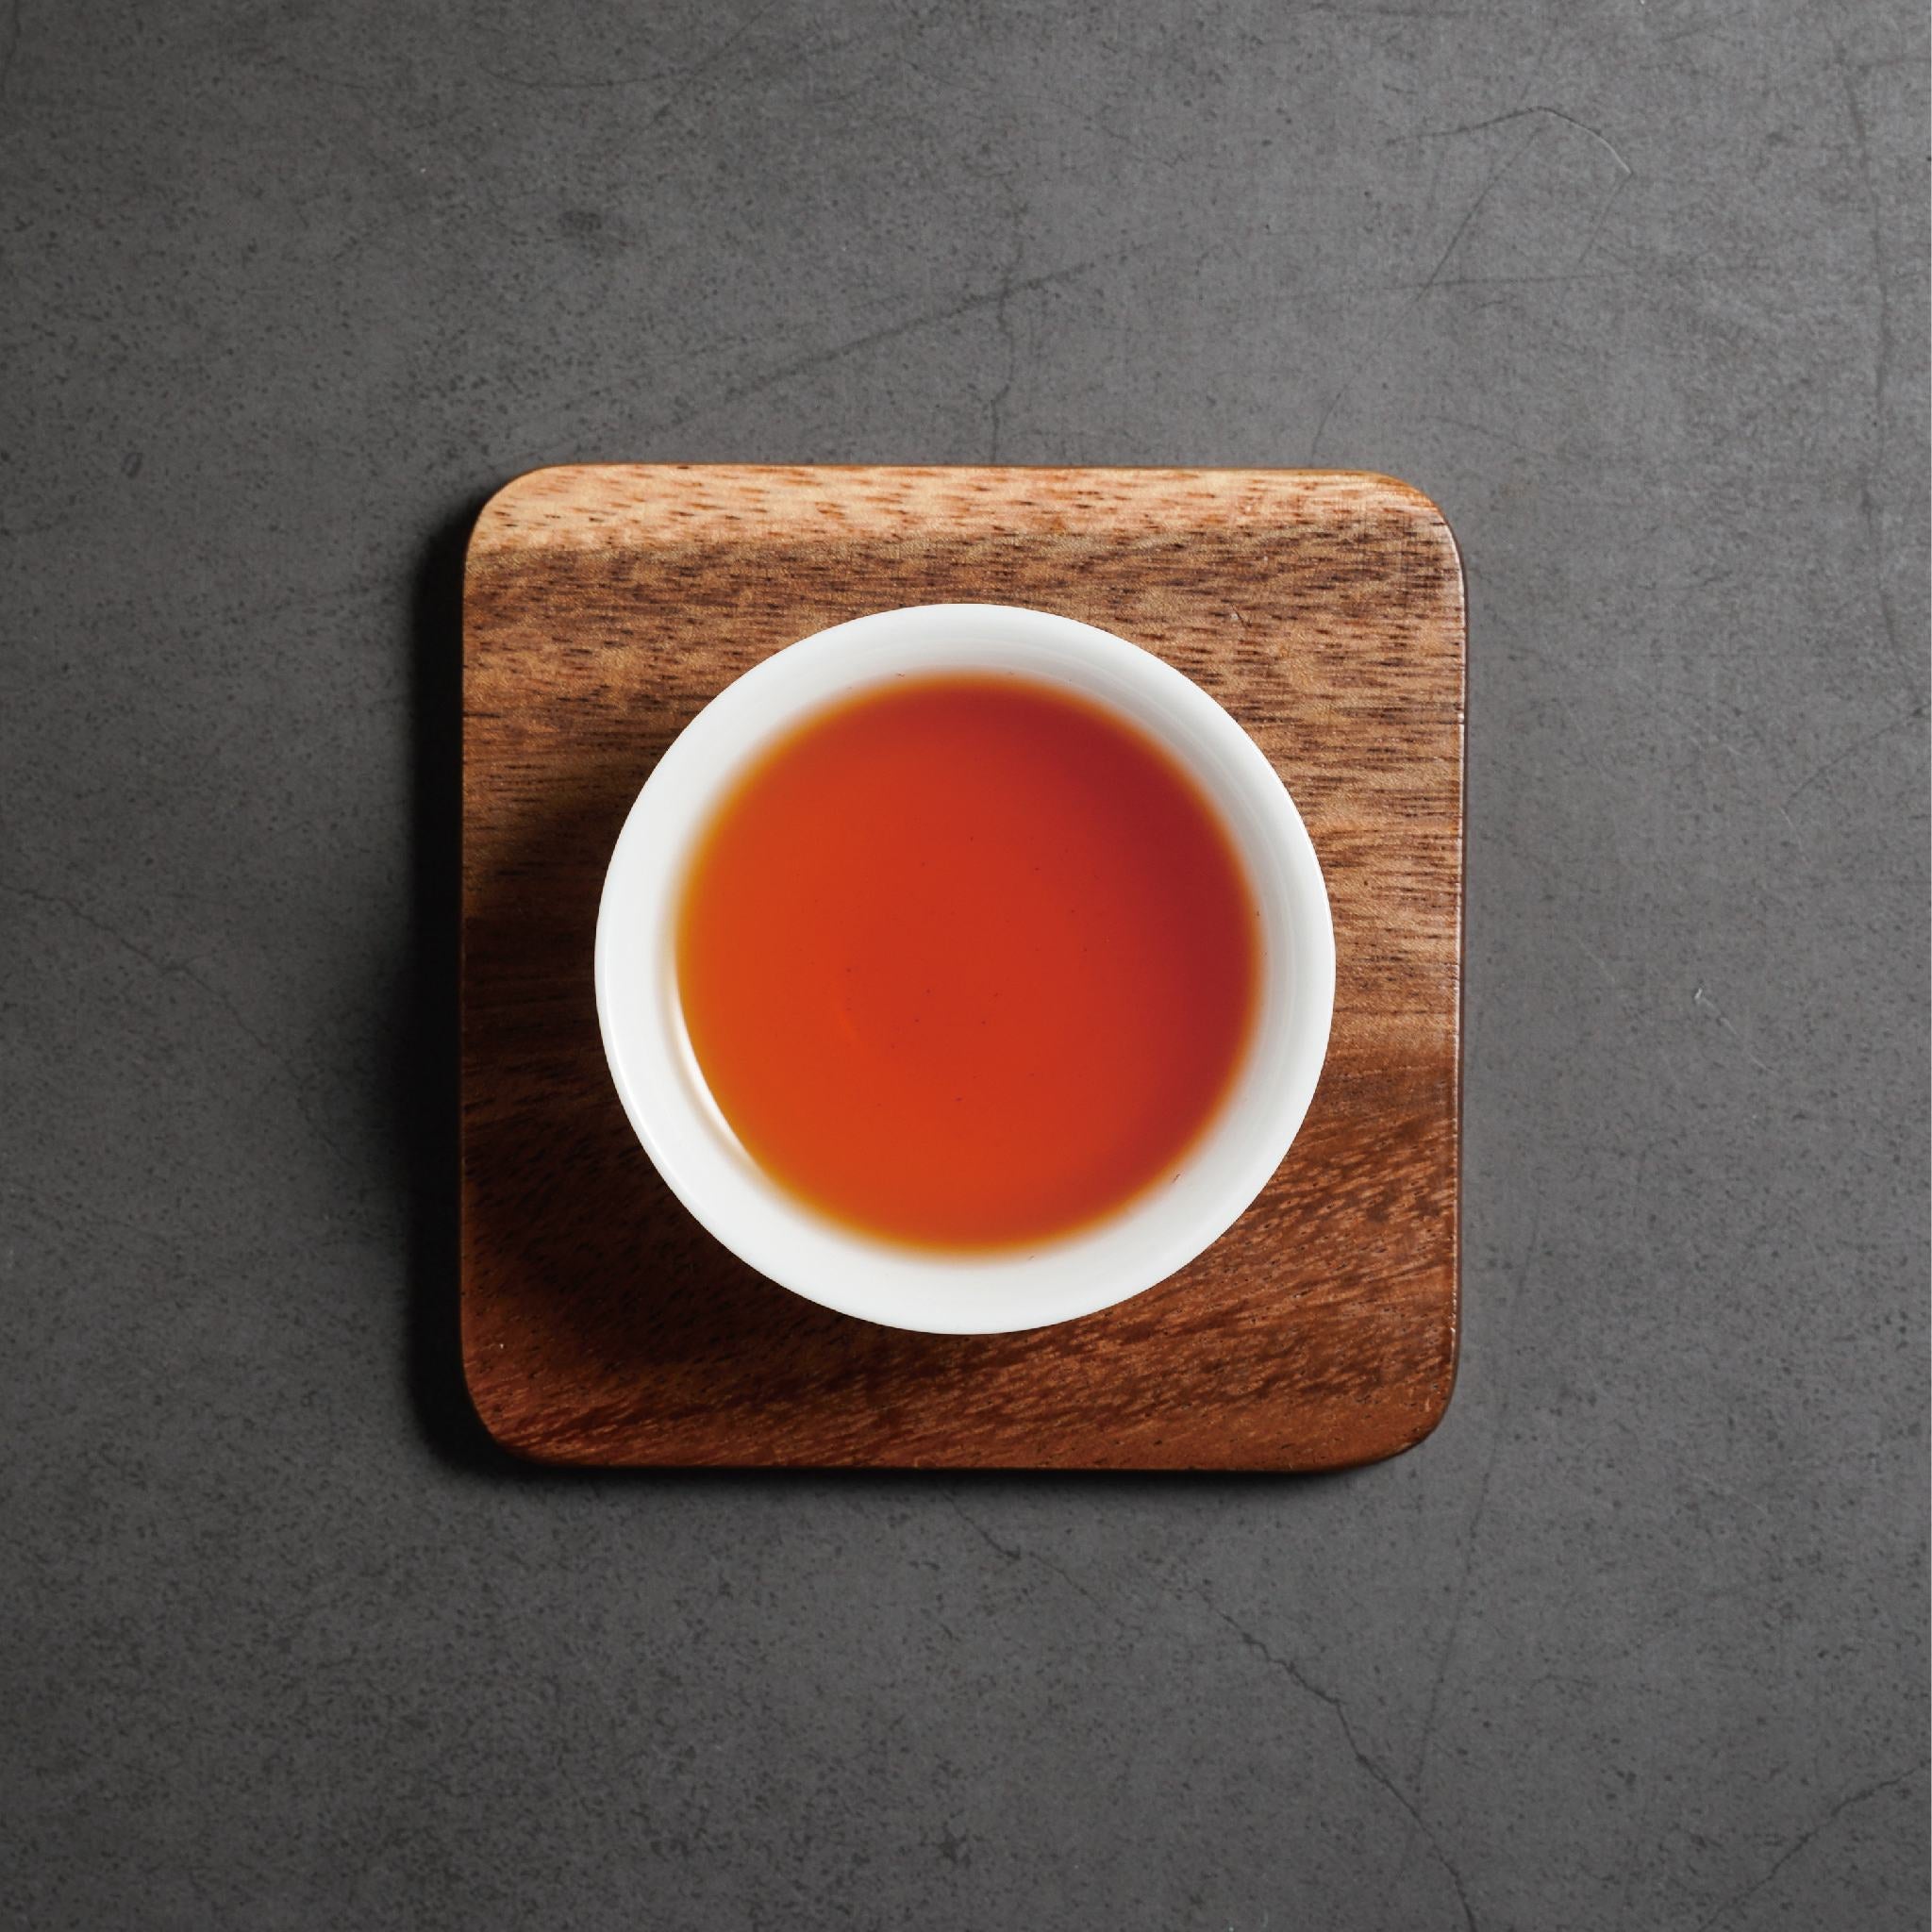 hong yu red jade tea liquor in cup